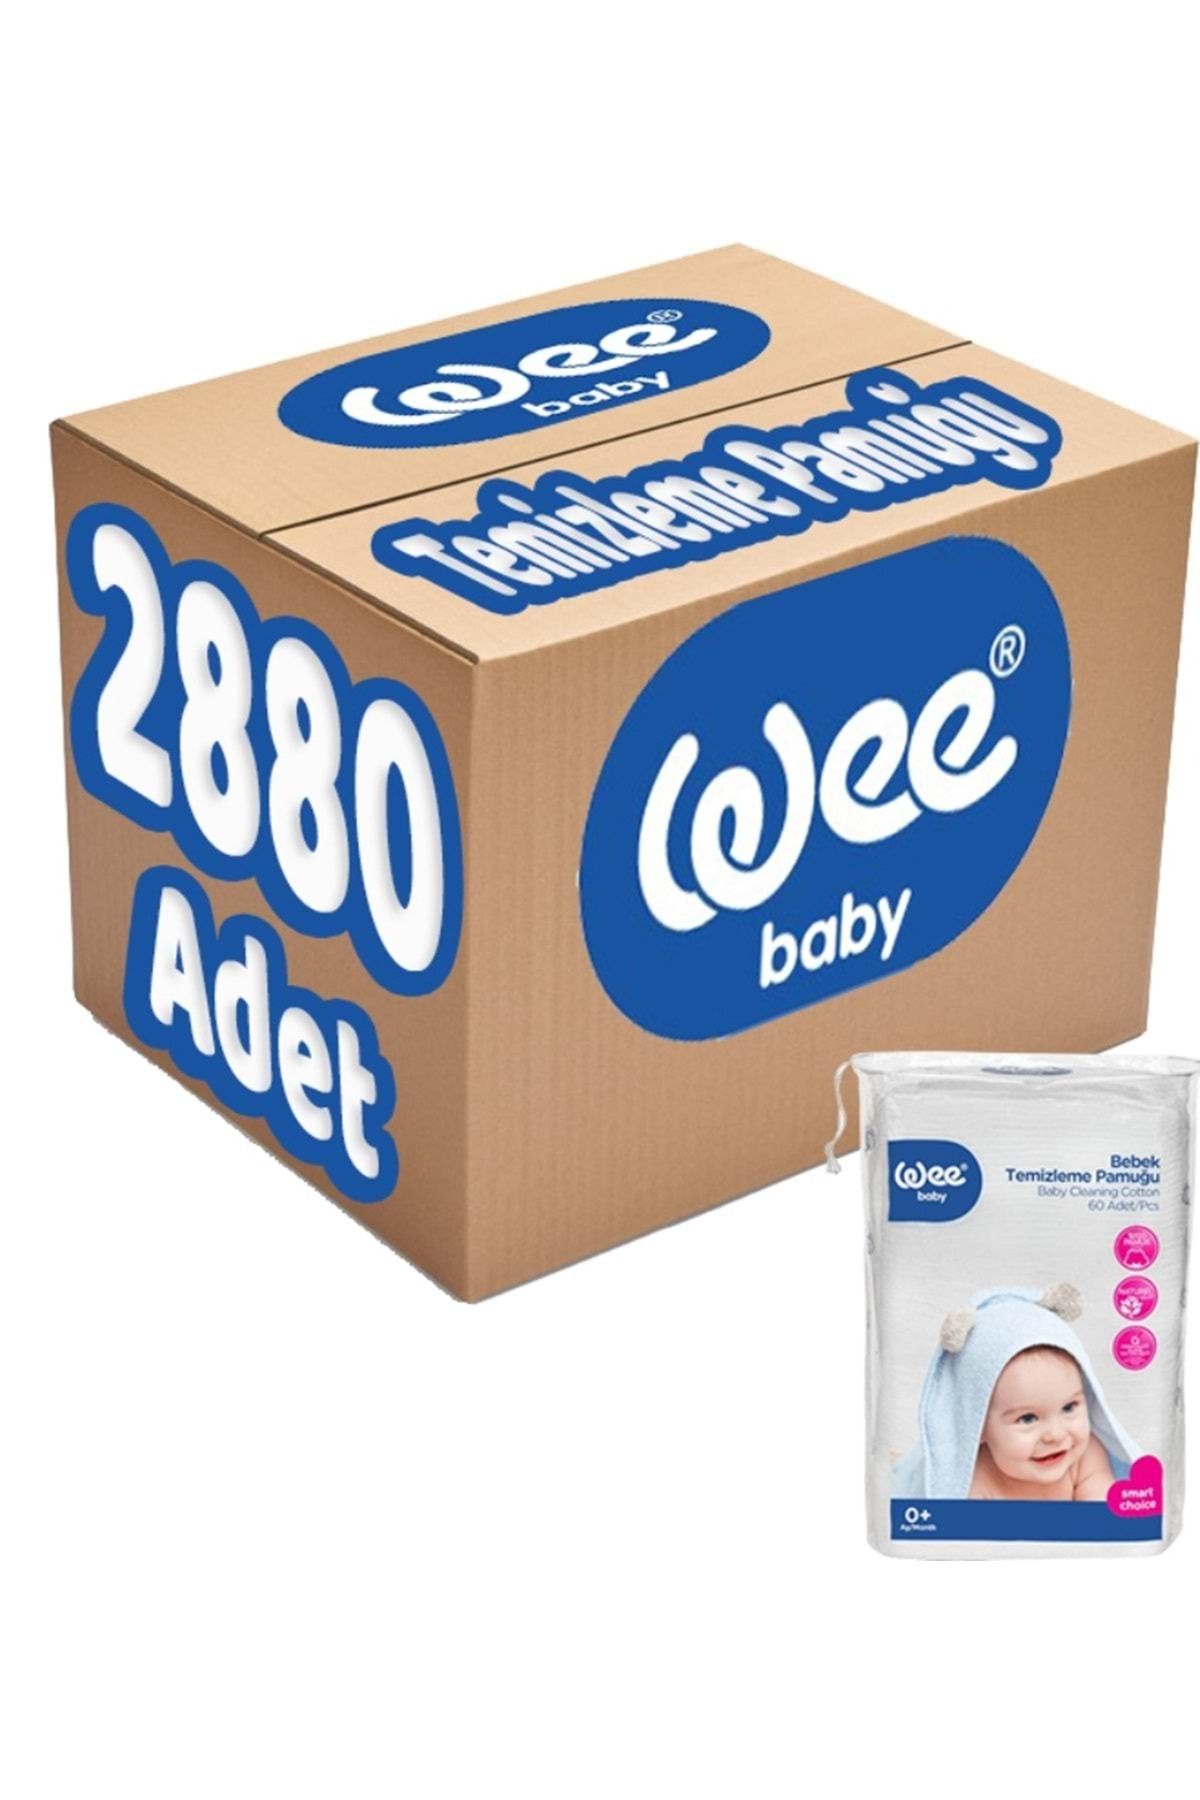 Wee Baby Bebek Temizleme Pamuğu 2880 Adet (48pk*60)